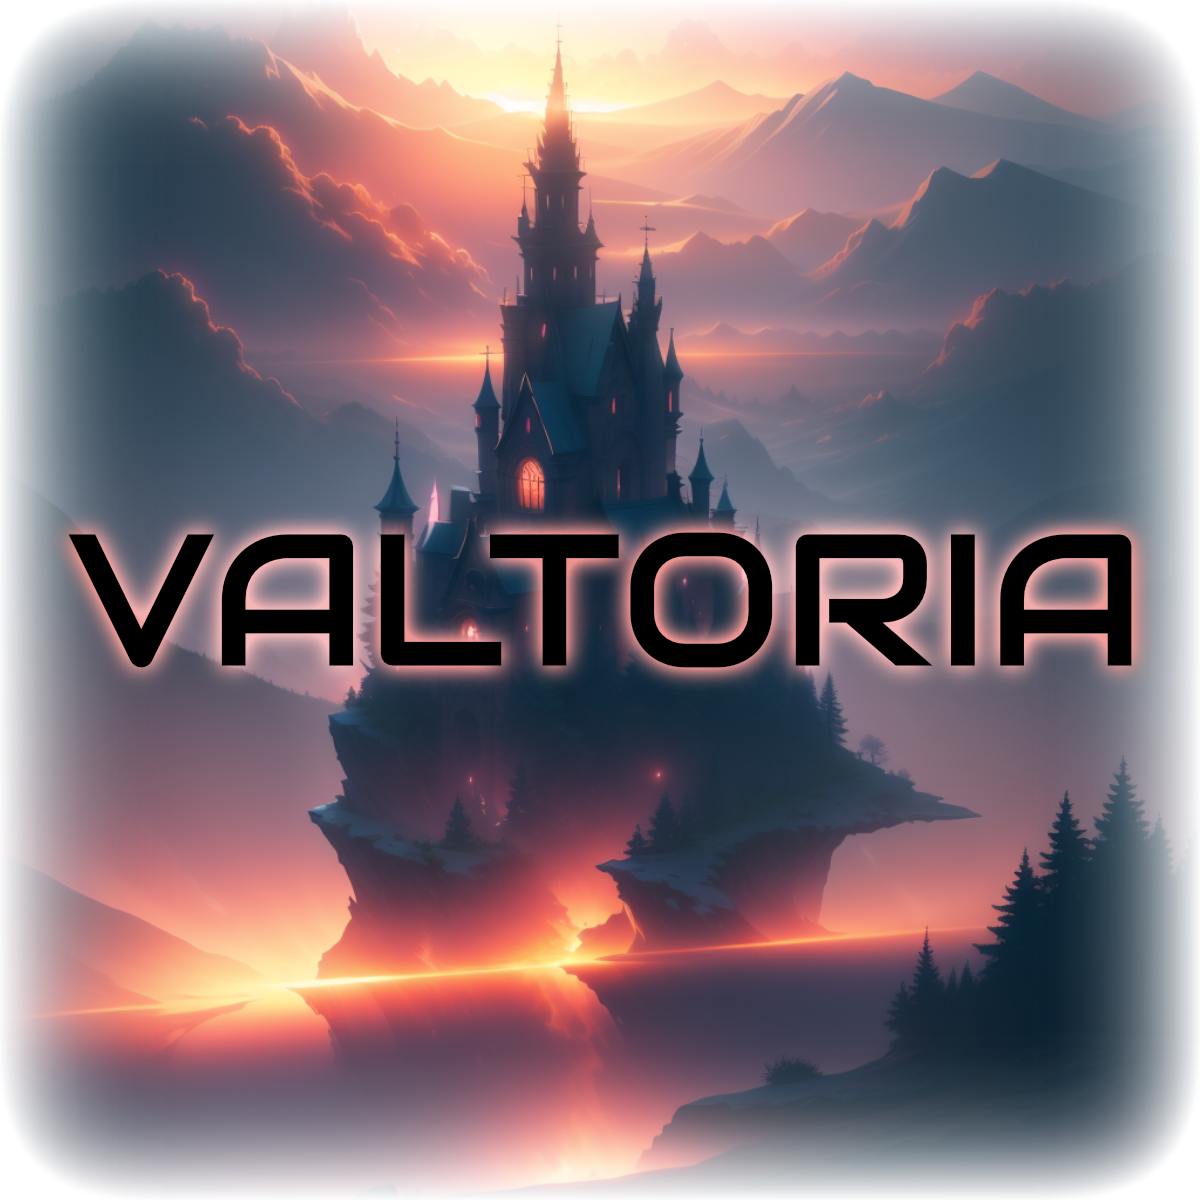 Valmata - Minecraft Modpacks - CurseForge